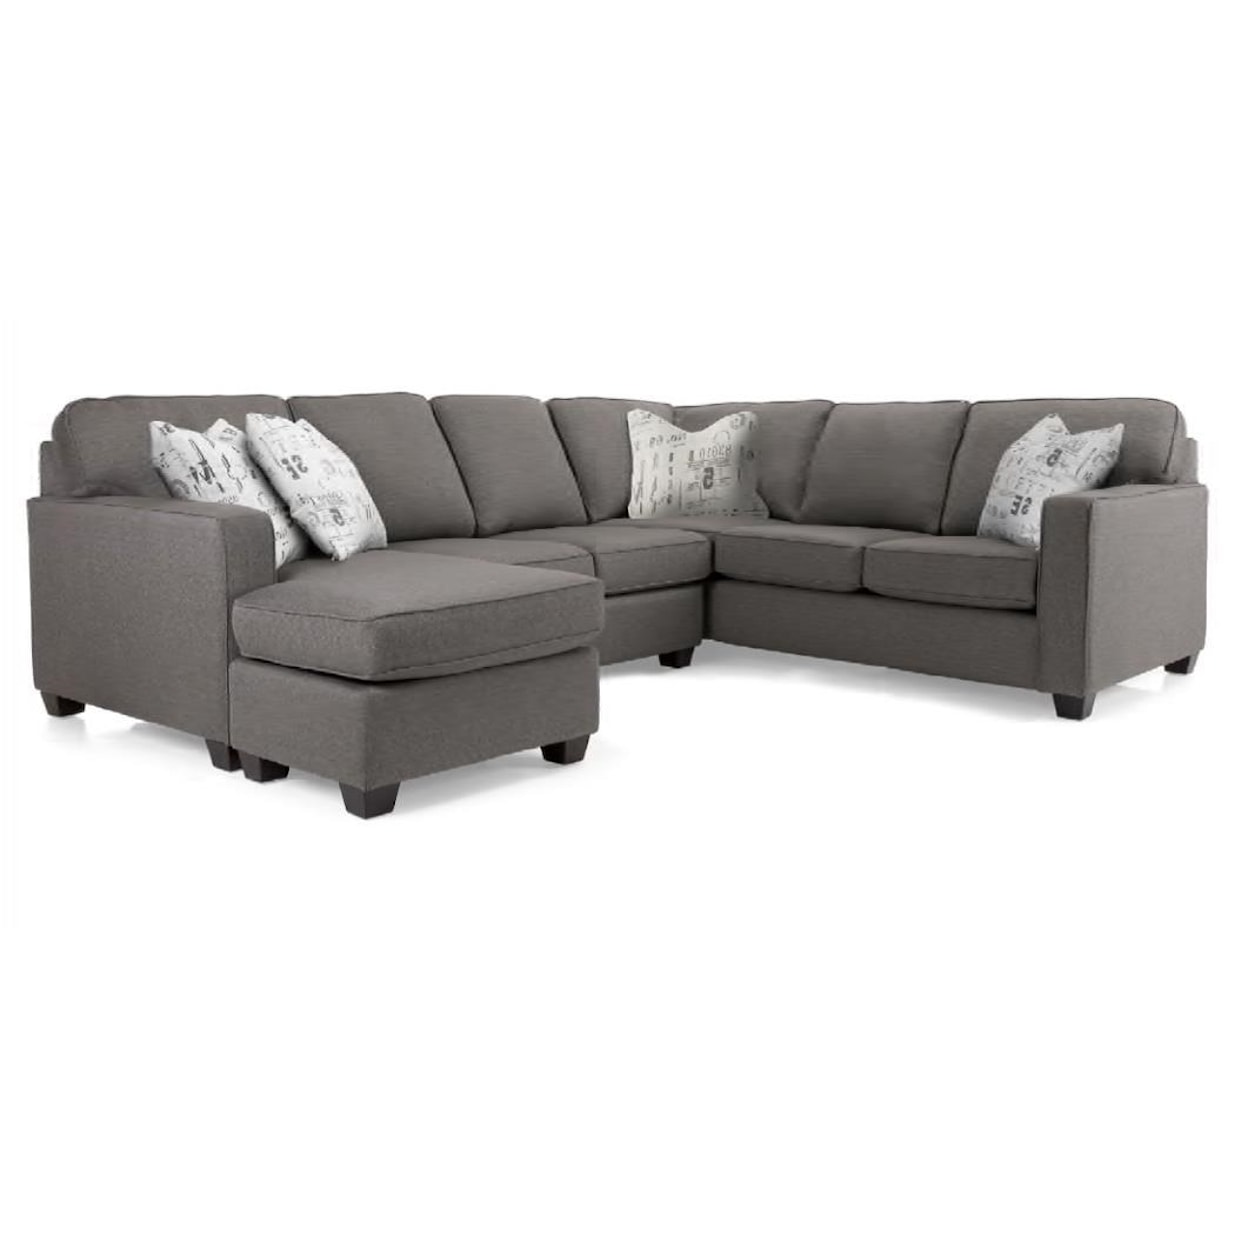 Decor-Rest 2541 Sectional Sofa